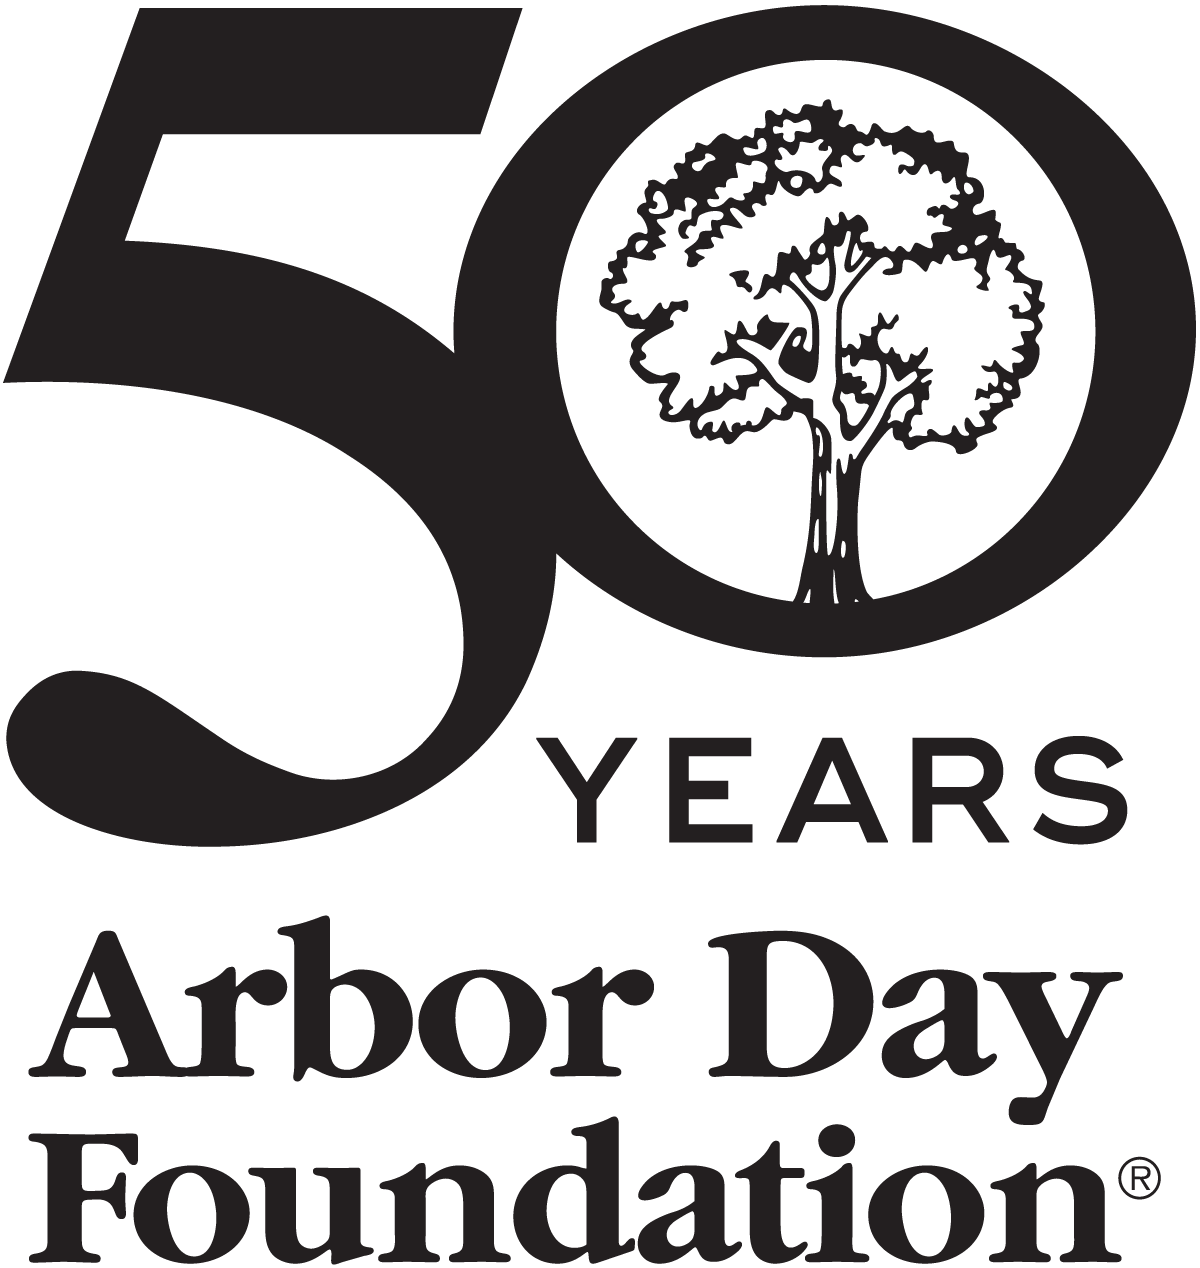 The Arbor Day Foundation's 50th anniversary logo